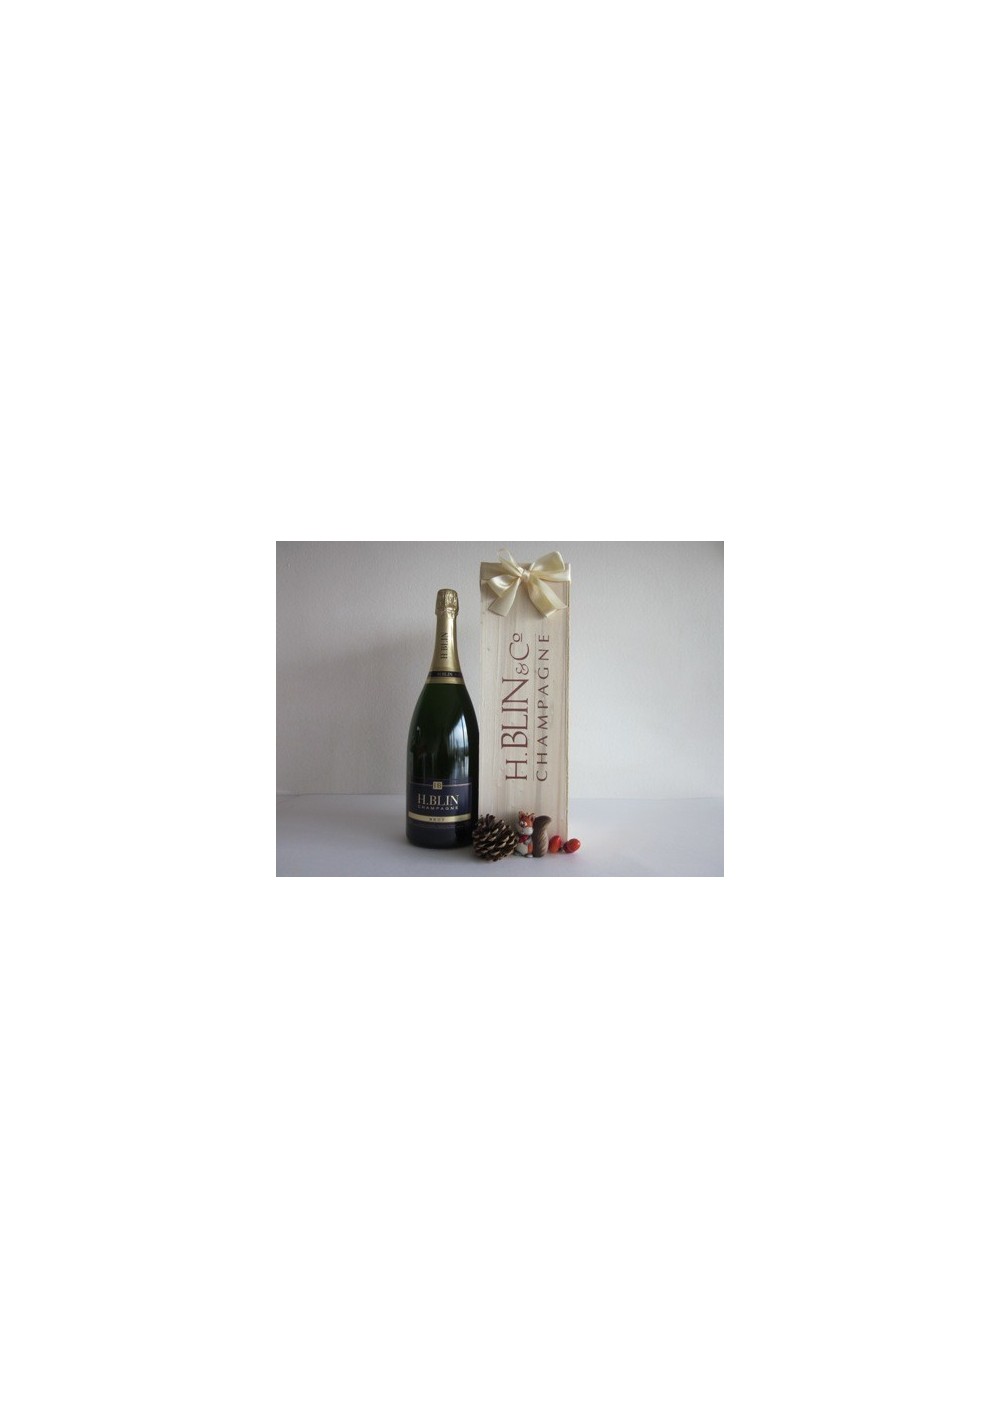 Champagne H. BLIN 9 LITRES